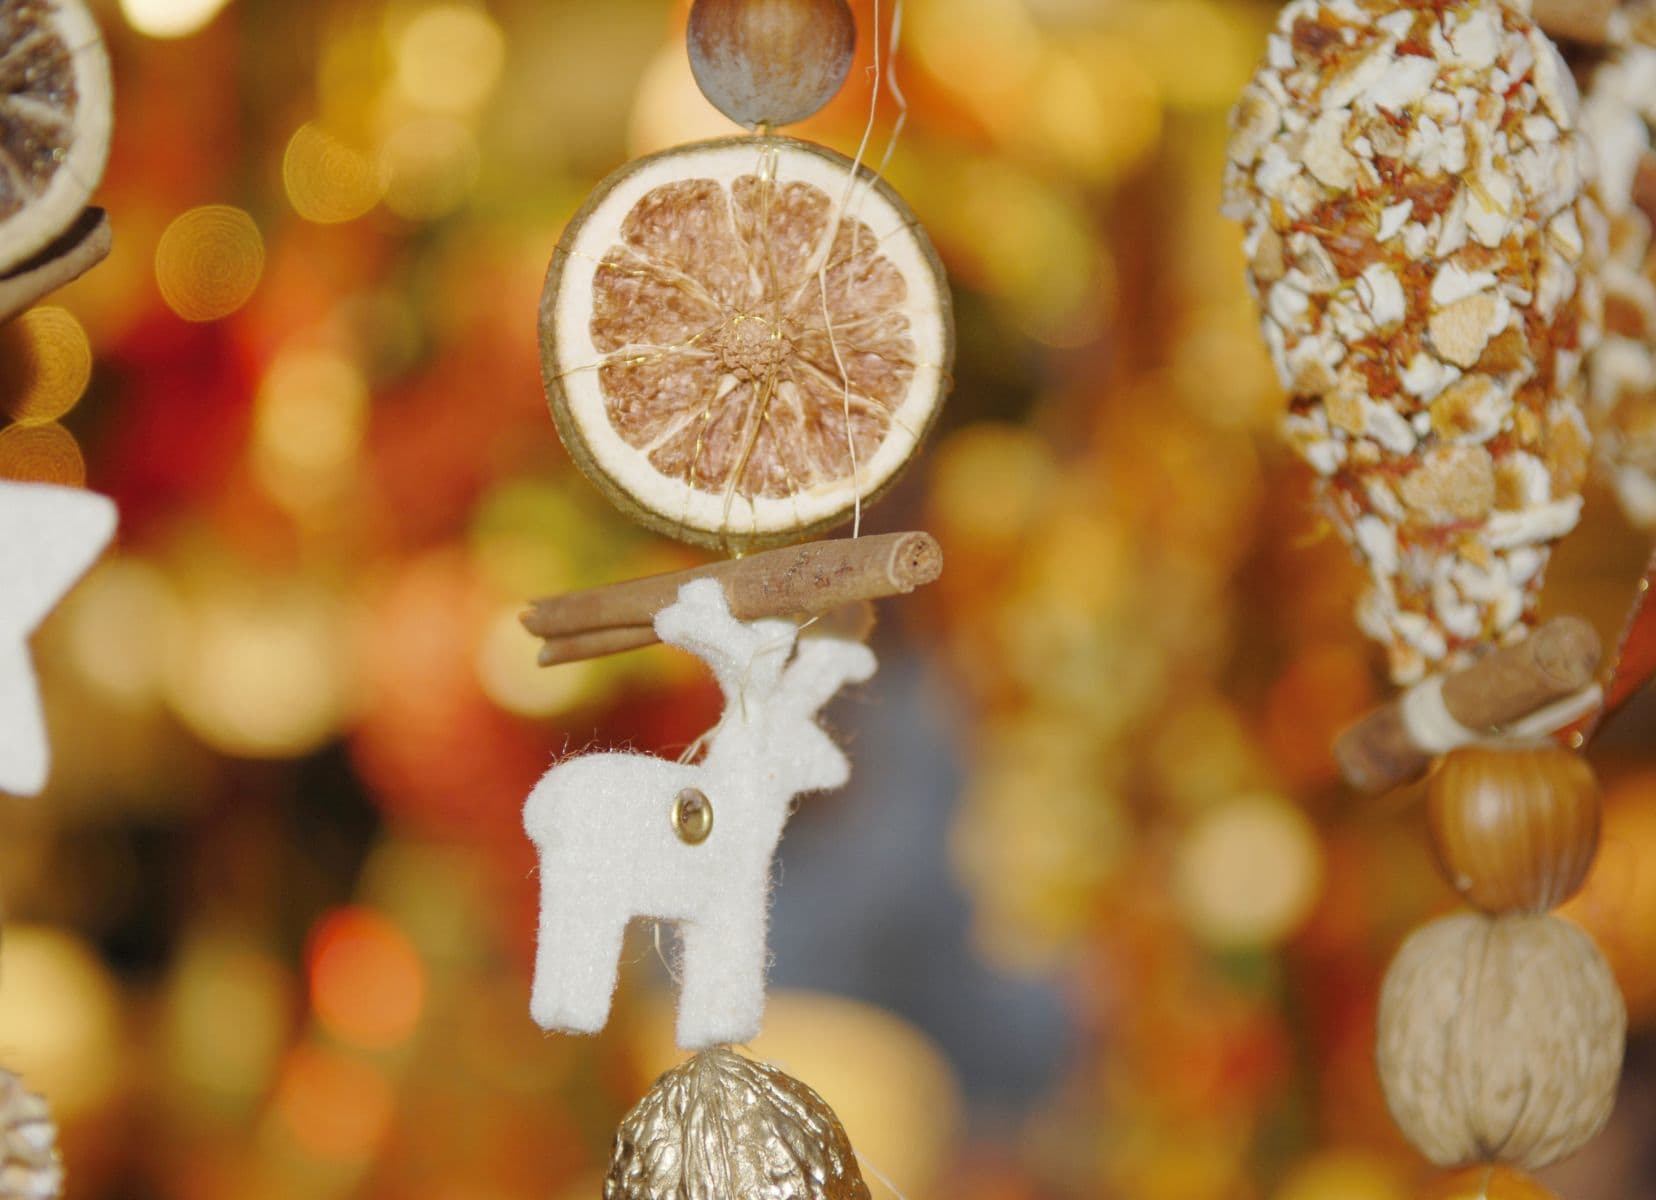 Swiss Christmas Markets hanging orange ornaments